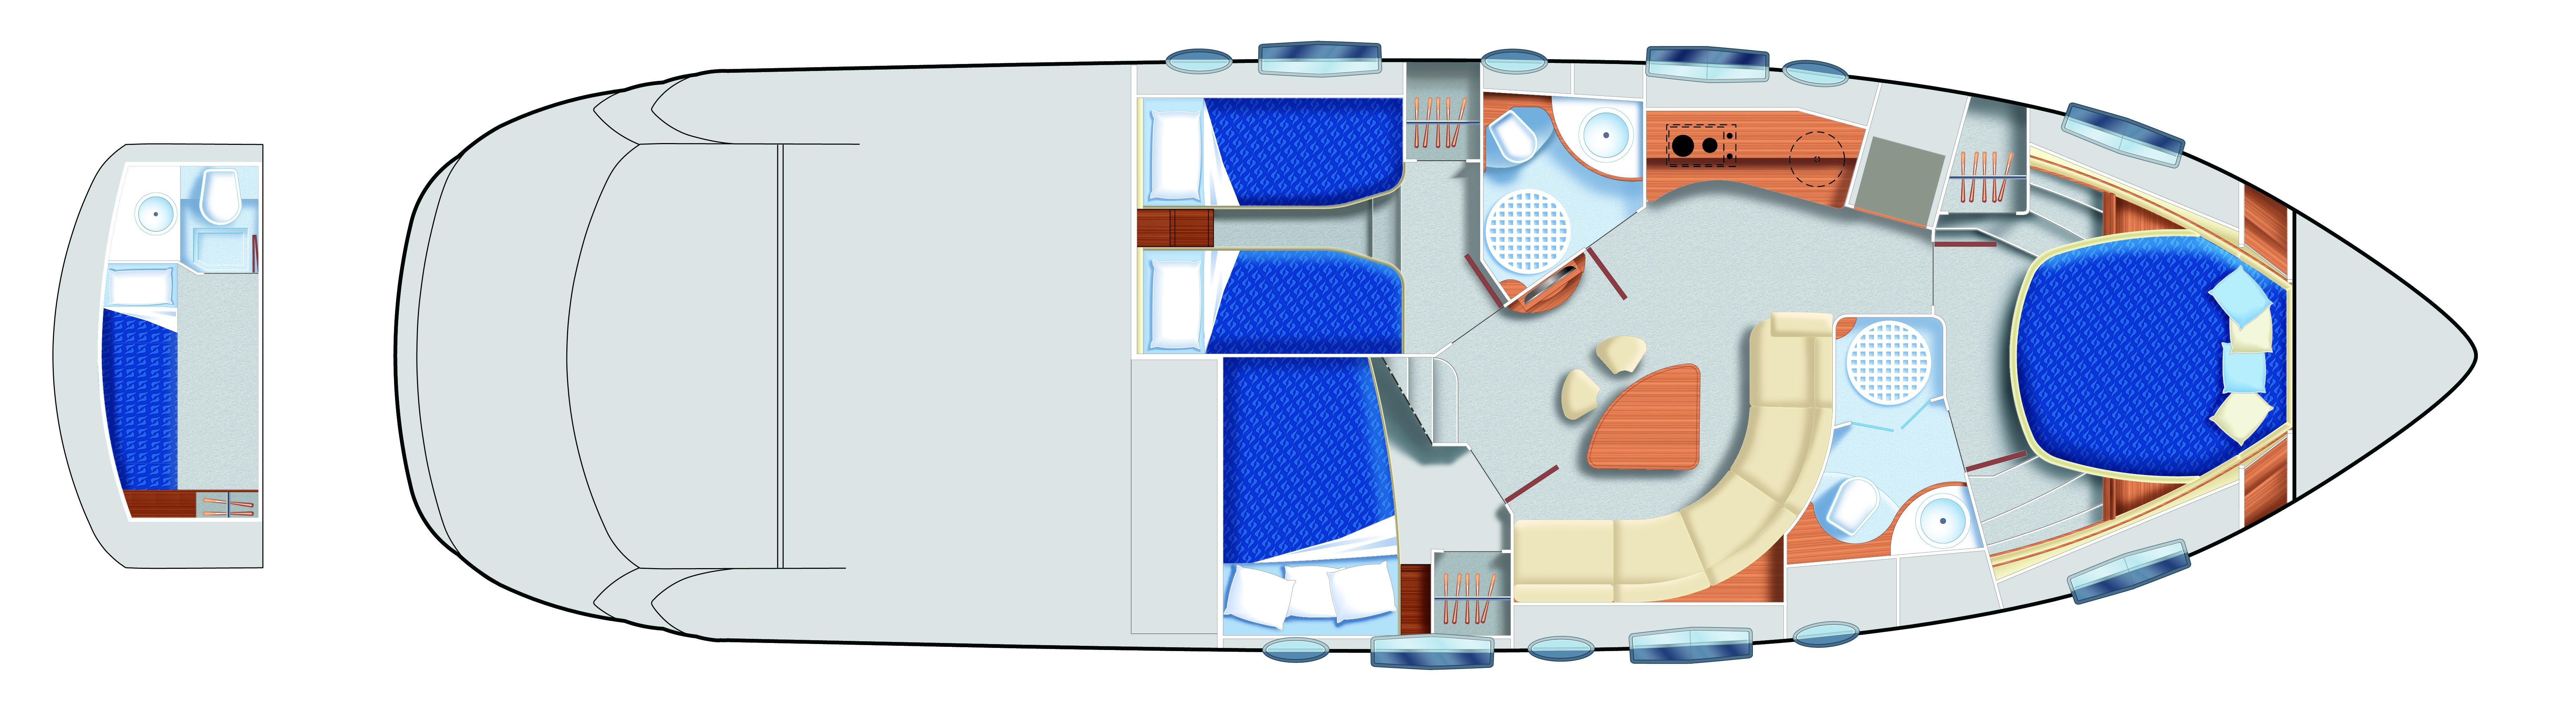 Manufacturer Provided Image: Pershing 50.1 Lower Deck Layout Plan